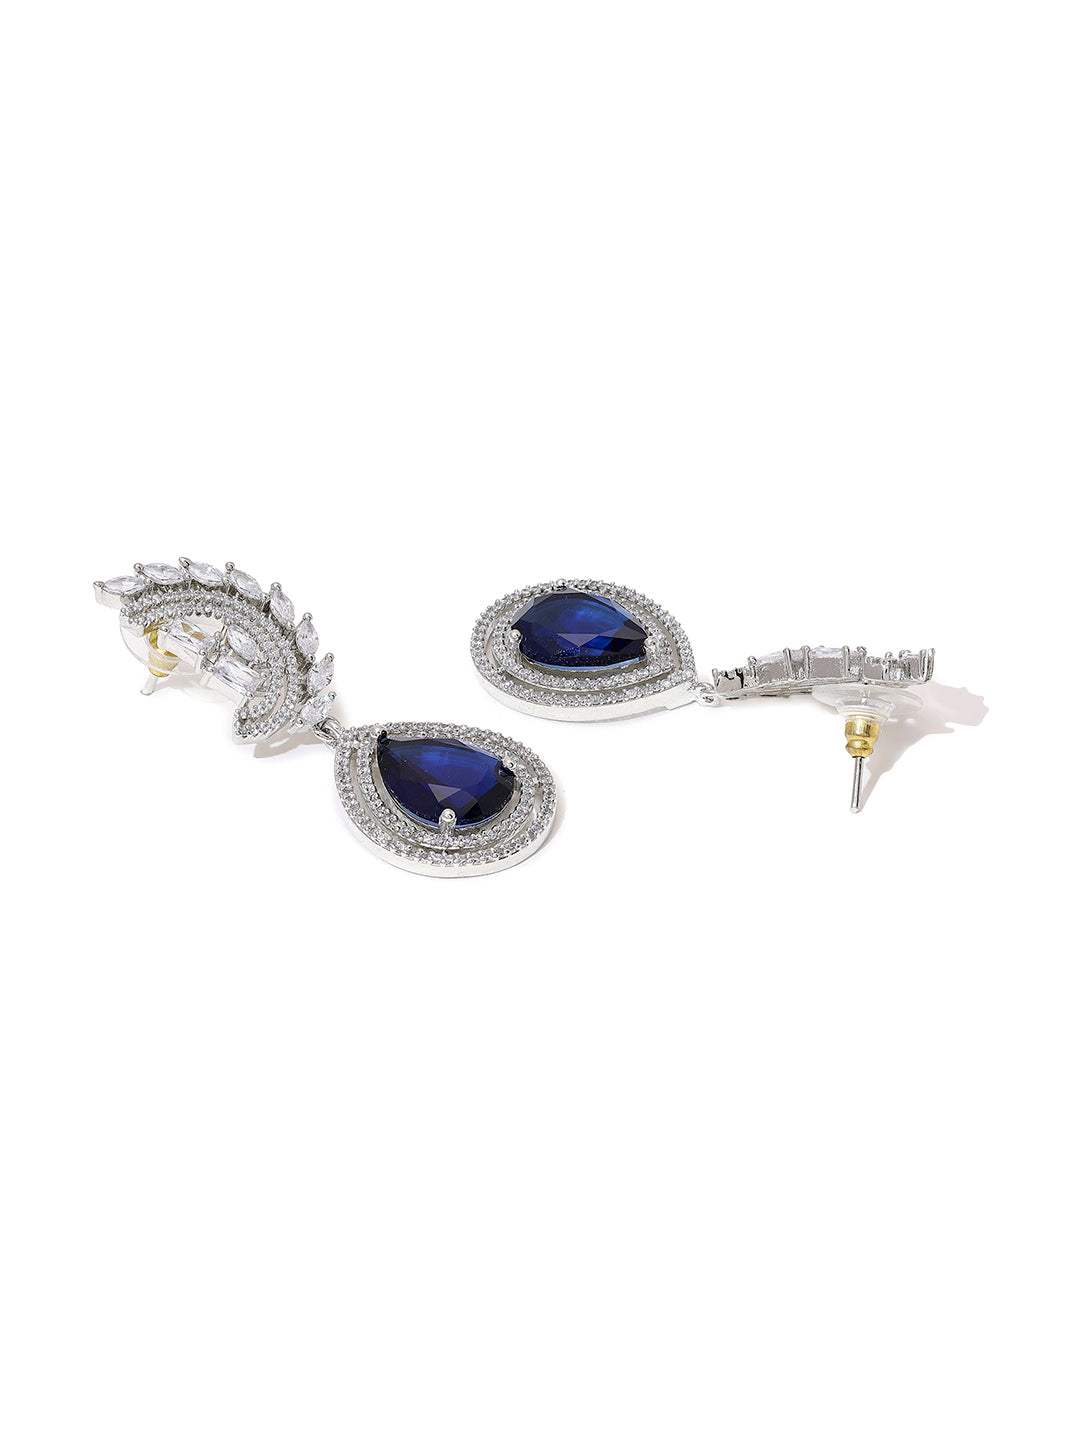 Priyaasi Silver-Plated American Diamond and Stunning Blue Diamond Earrings